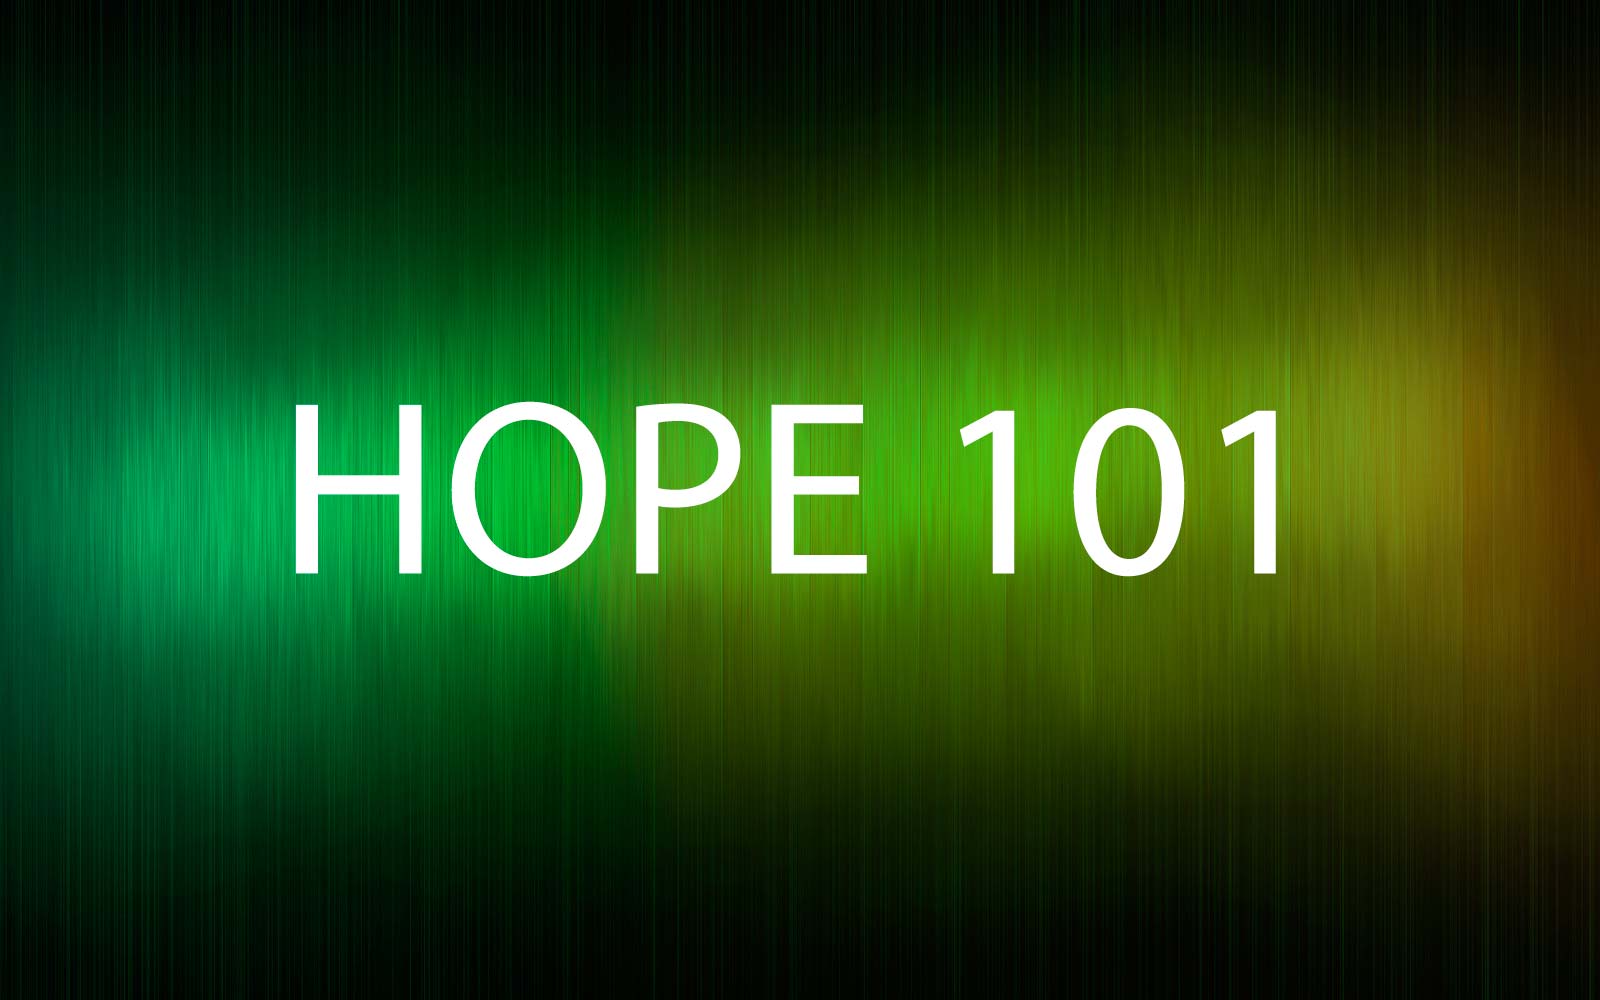 HOPE 101